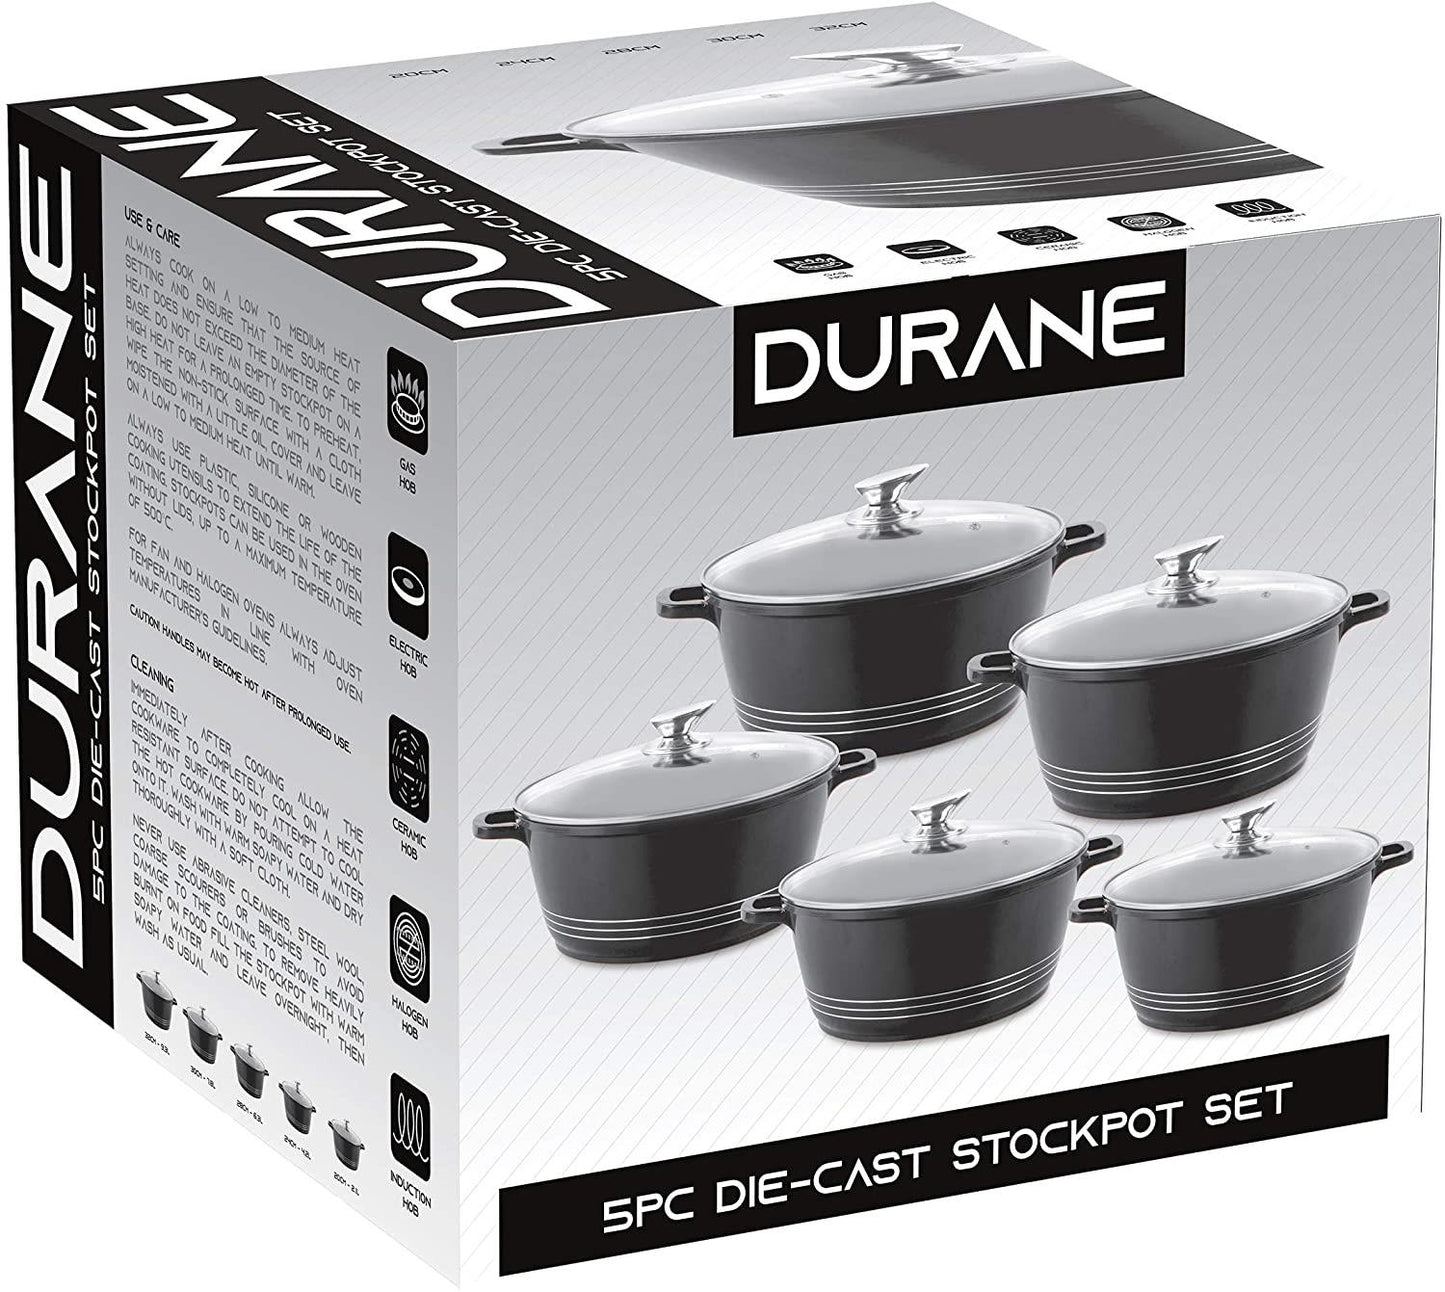 Durane Diecast Stockpot Set with Lids 5pc- Black